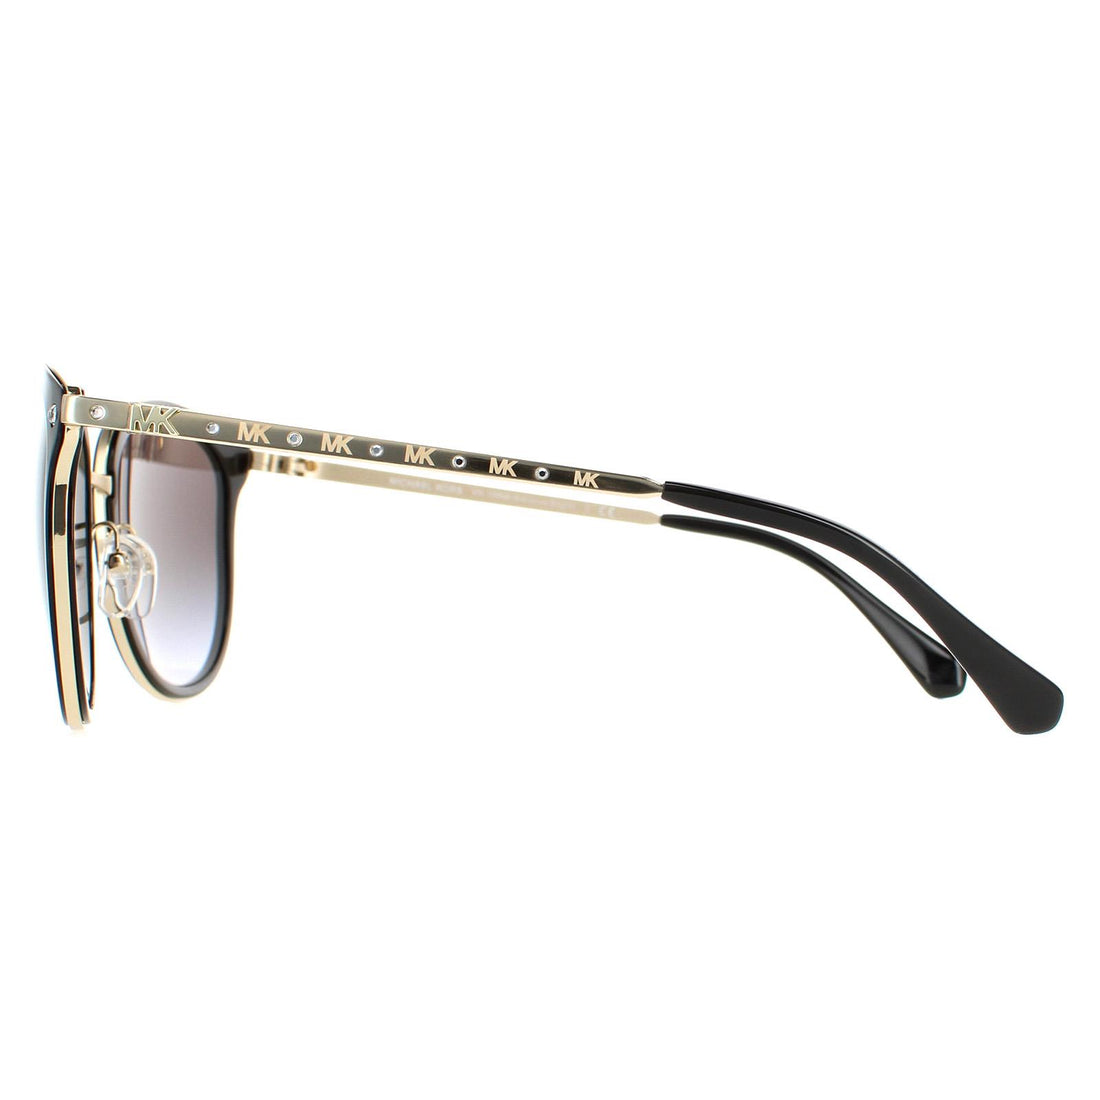 Michael Kors Sunglasses Adrianna Bright MK1099B 30058G Black Dark Grey Gradient